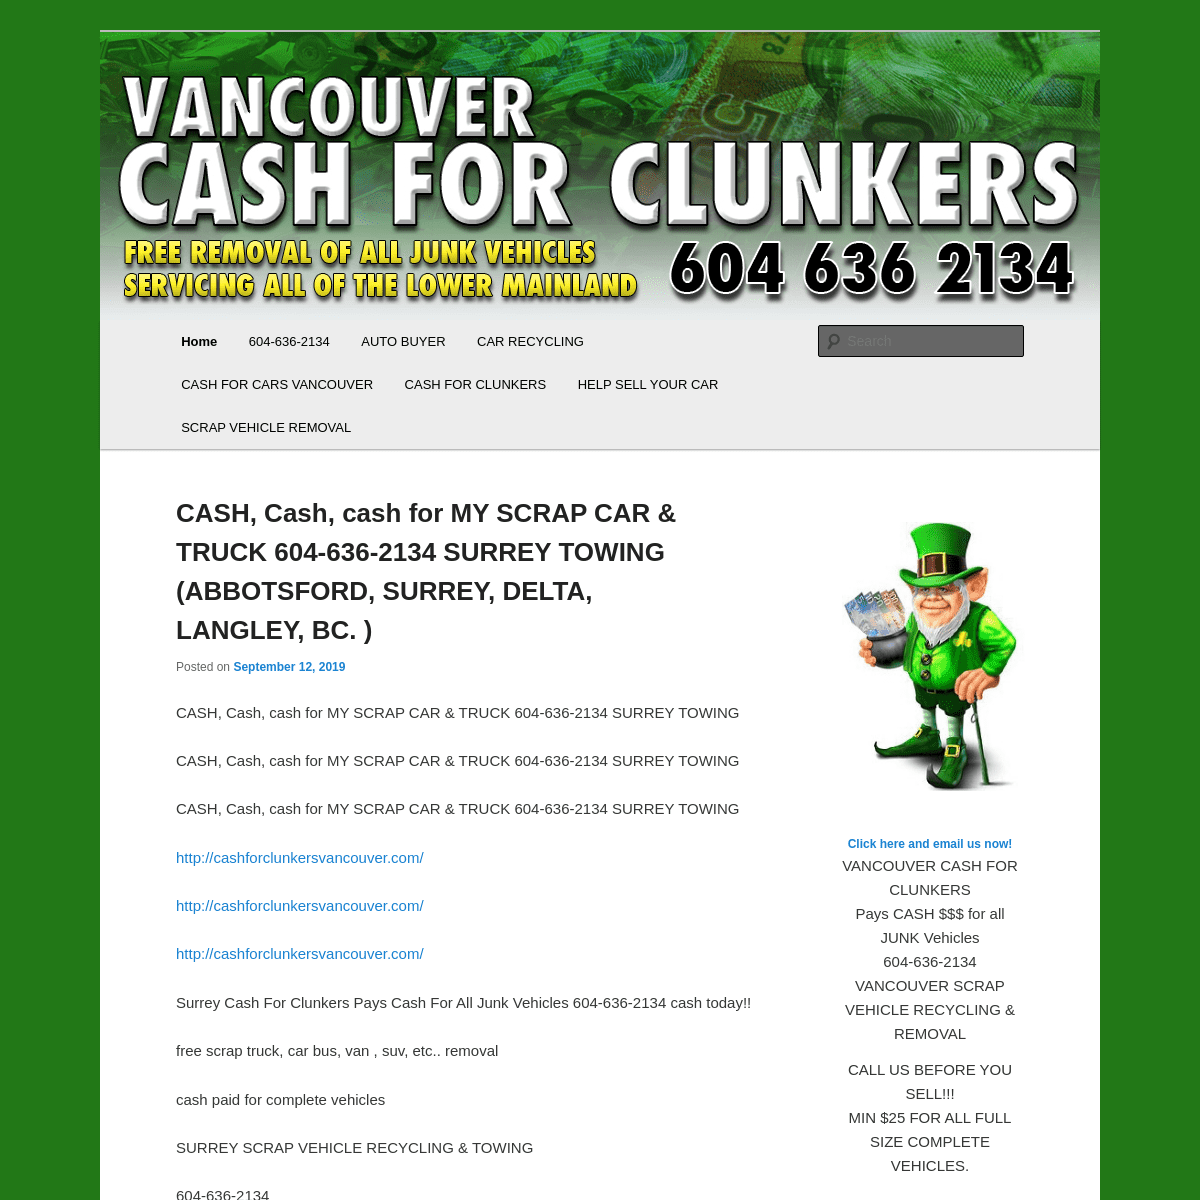 A complete backup of https://cashforclunkersvancouver.com